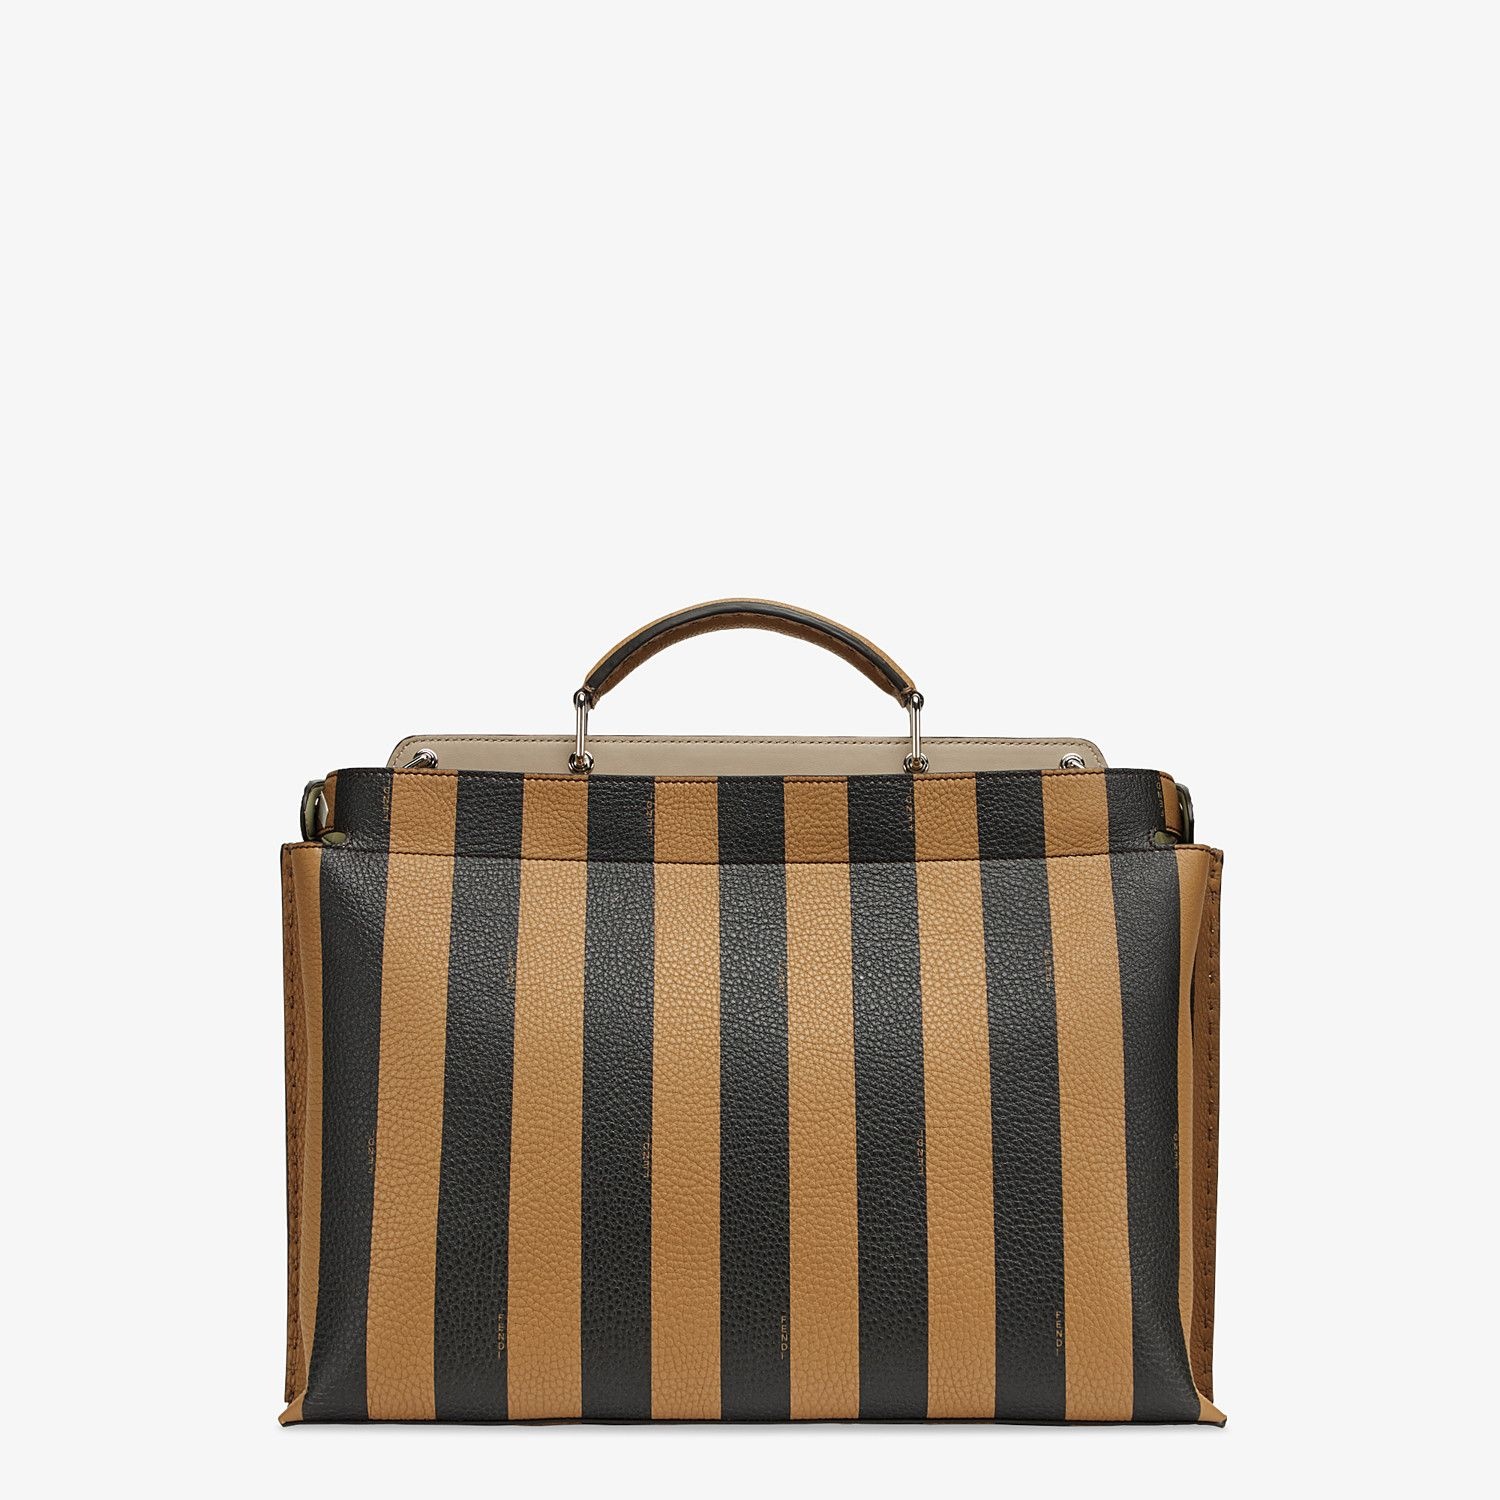  Brown leather bag - 3